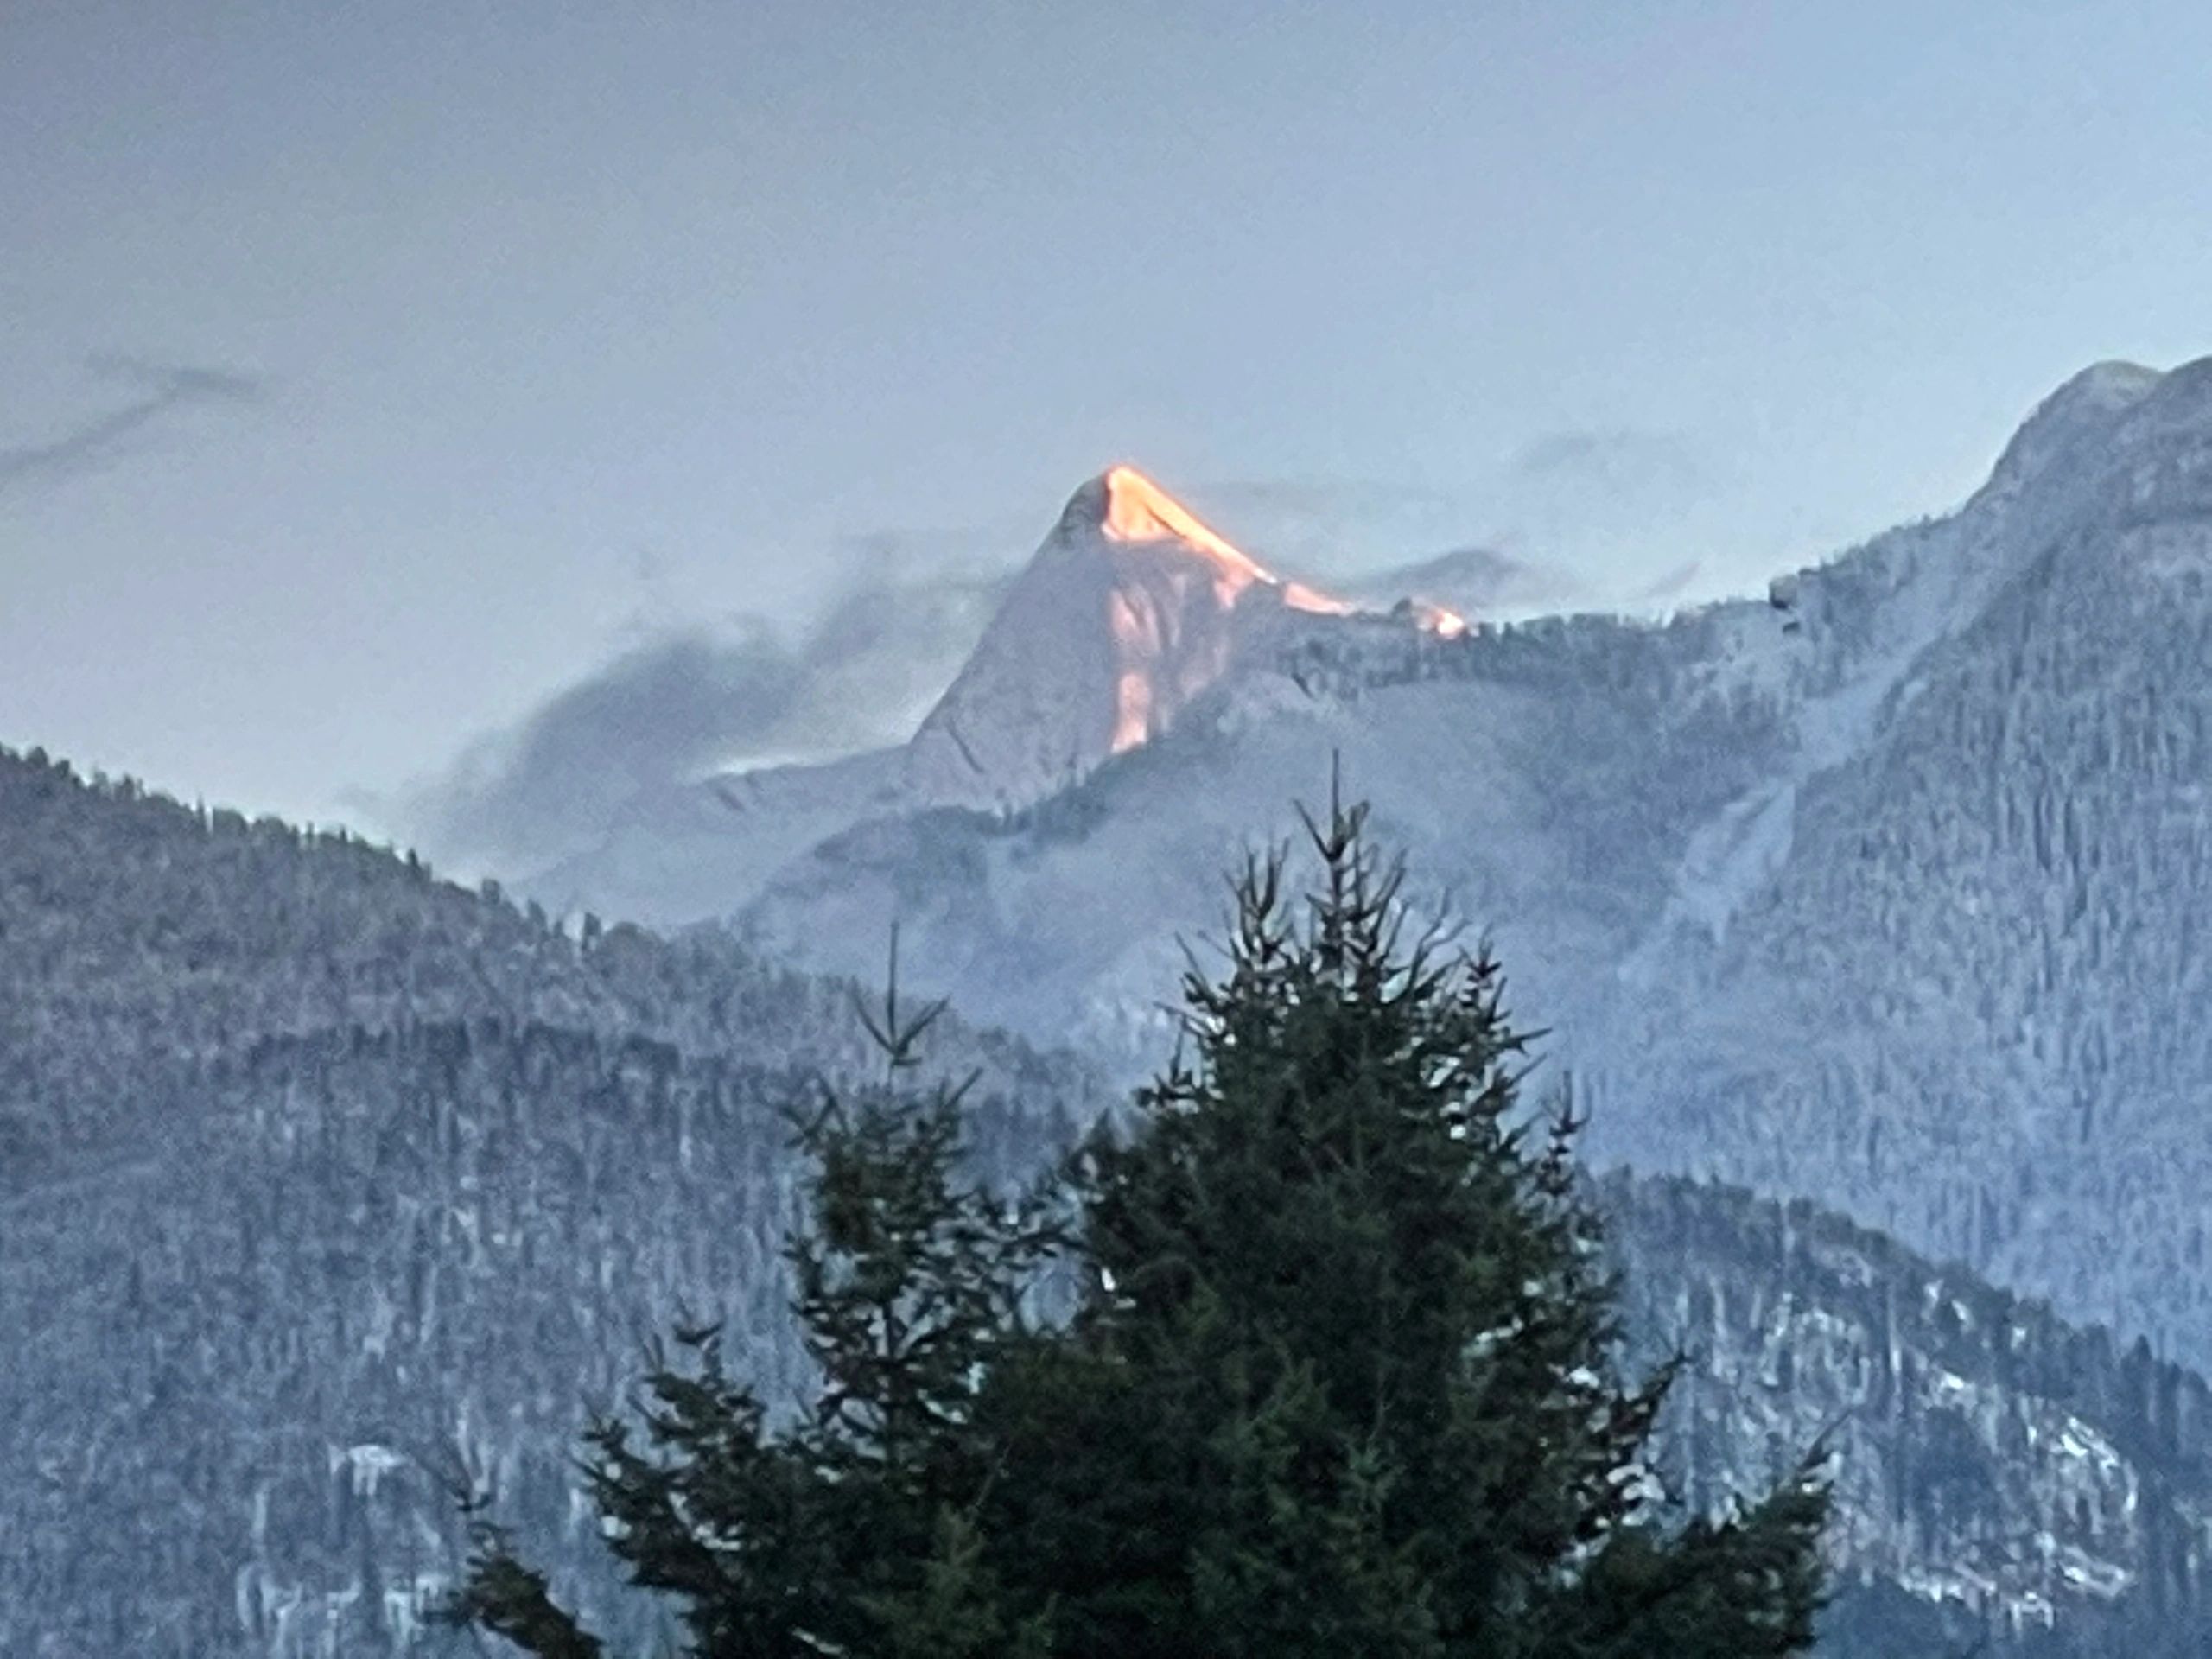 View from Kaslo
Loki Mountain mountaintop Glacier climb hike wilderness 